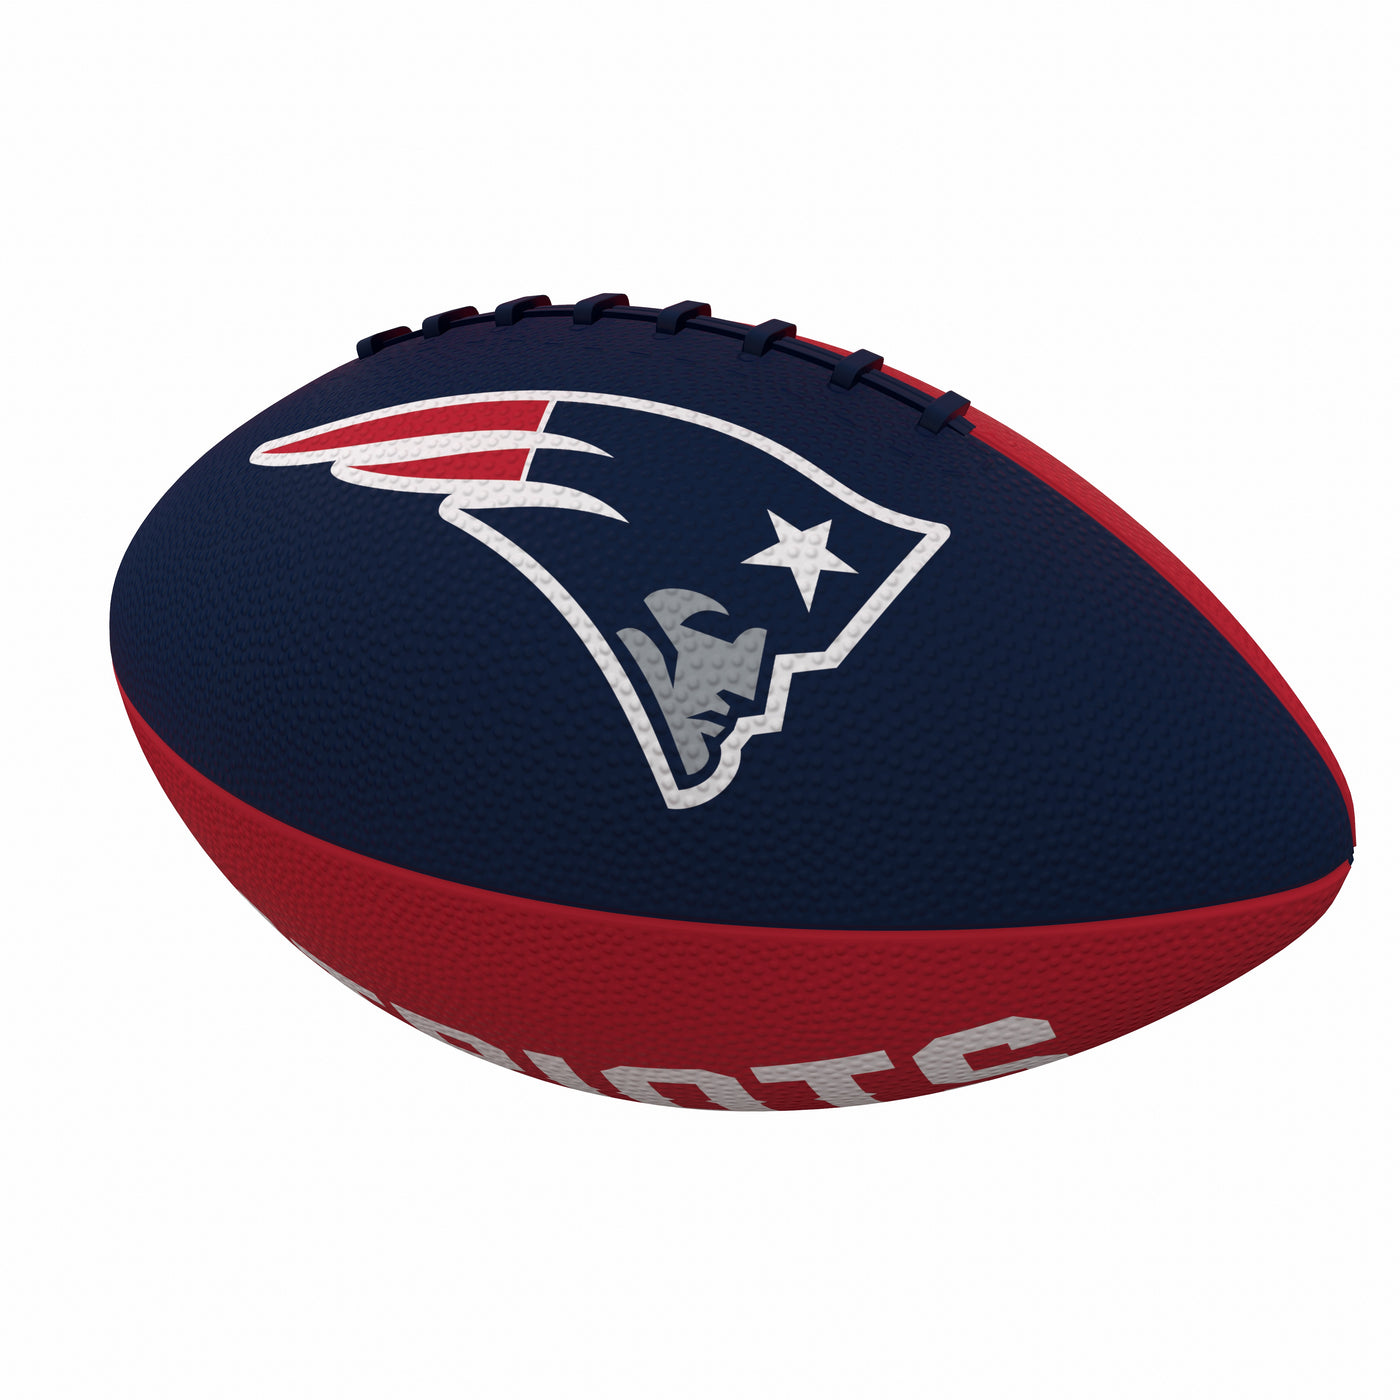 New England Patriots Pinwheel Logo Junior-Size Rubber Football